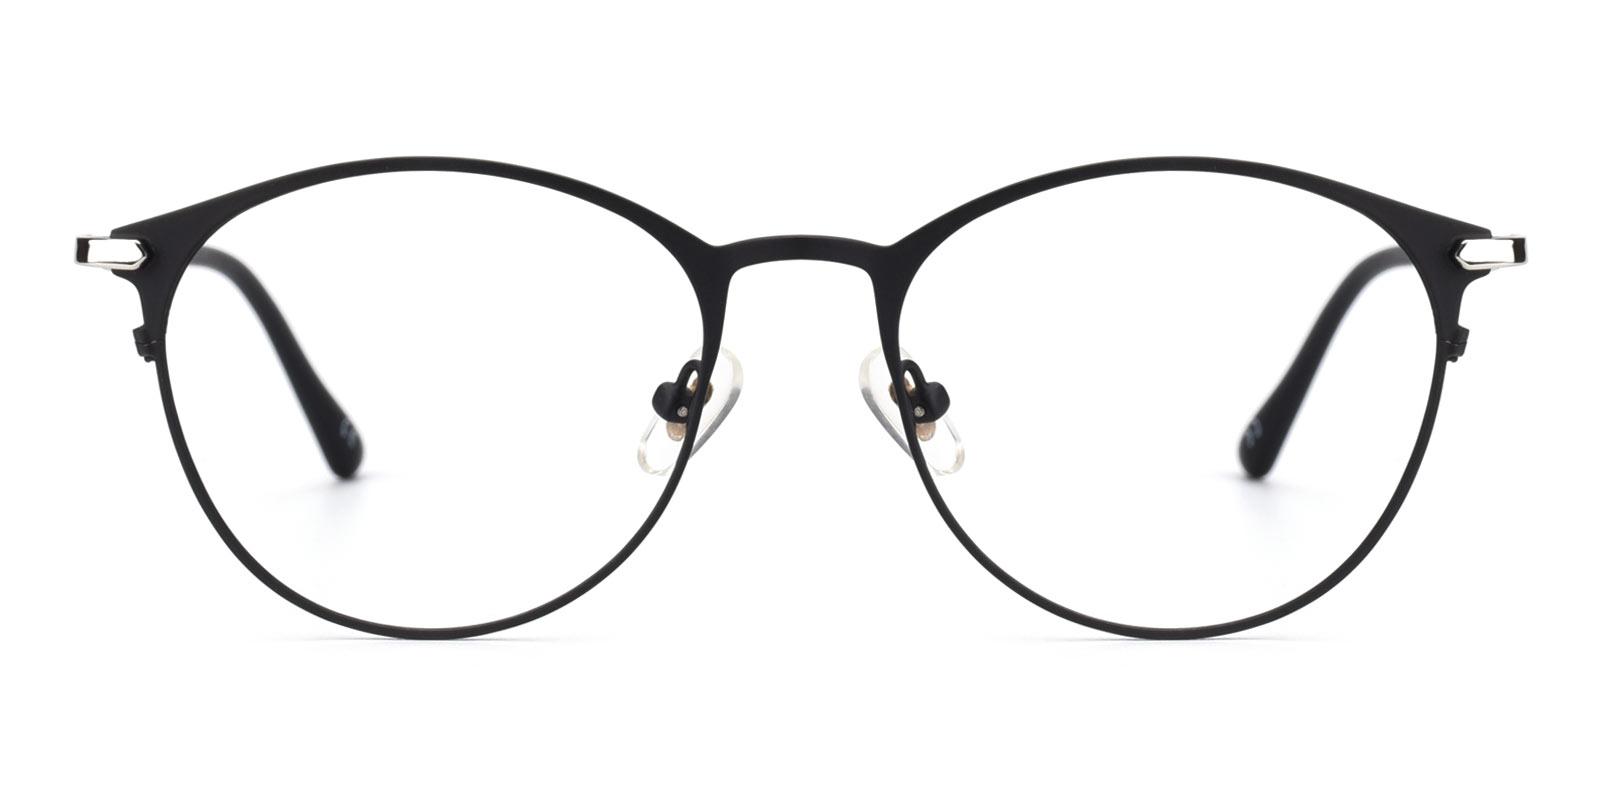 Persisto Black Metal Eyeglasses , Fashion , NosePads Frames from ABBE Glasses